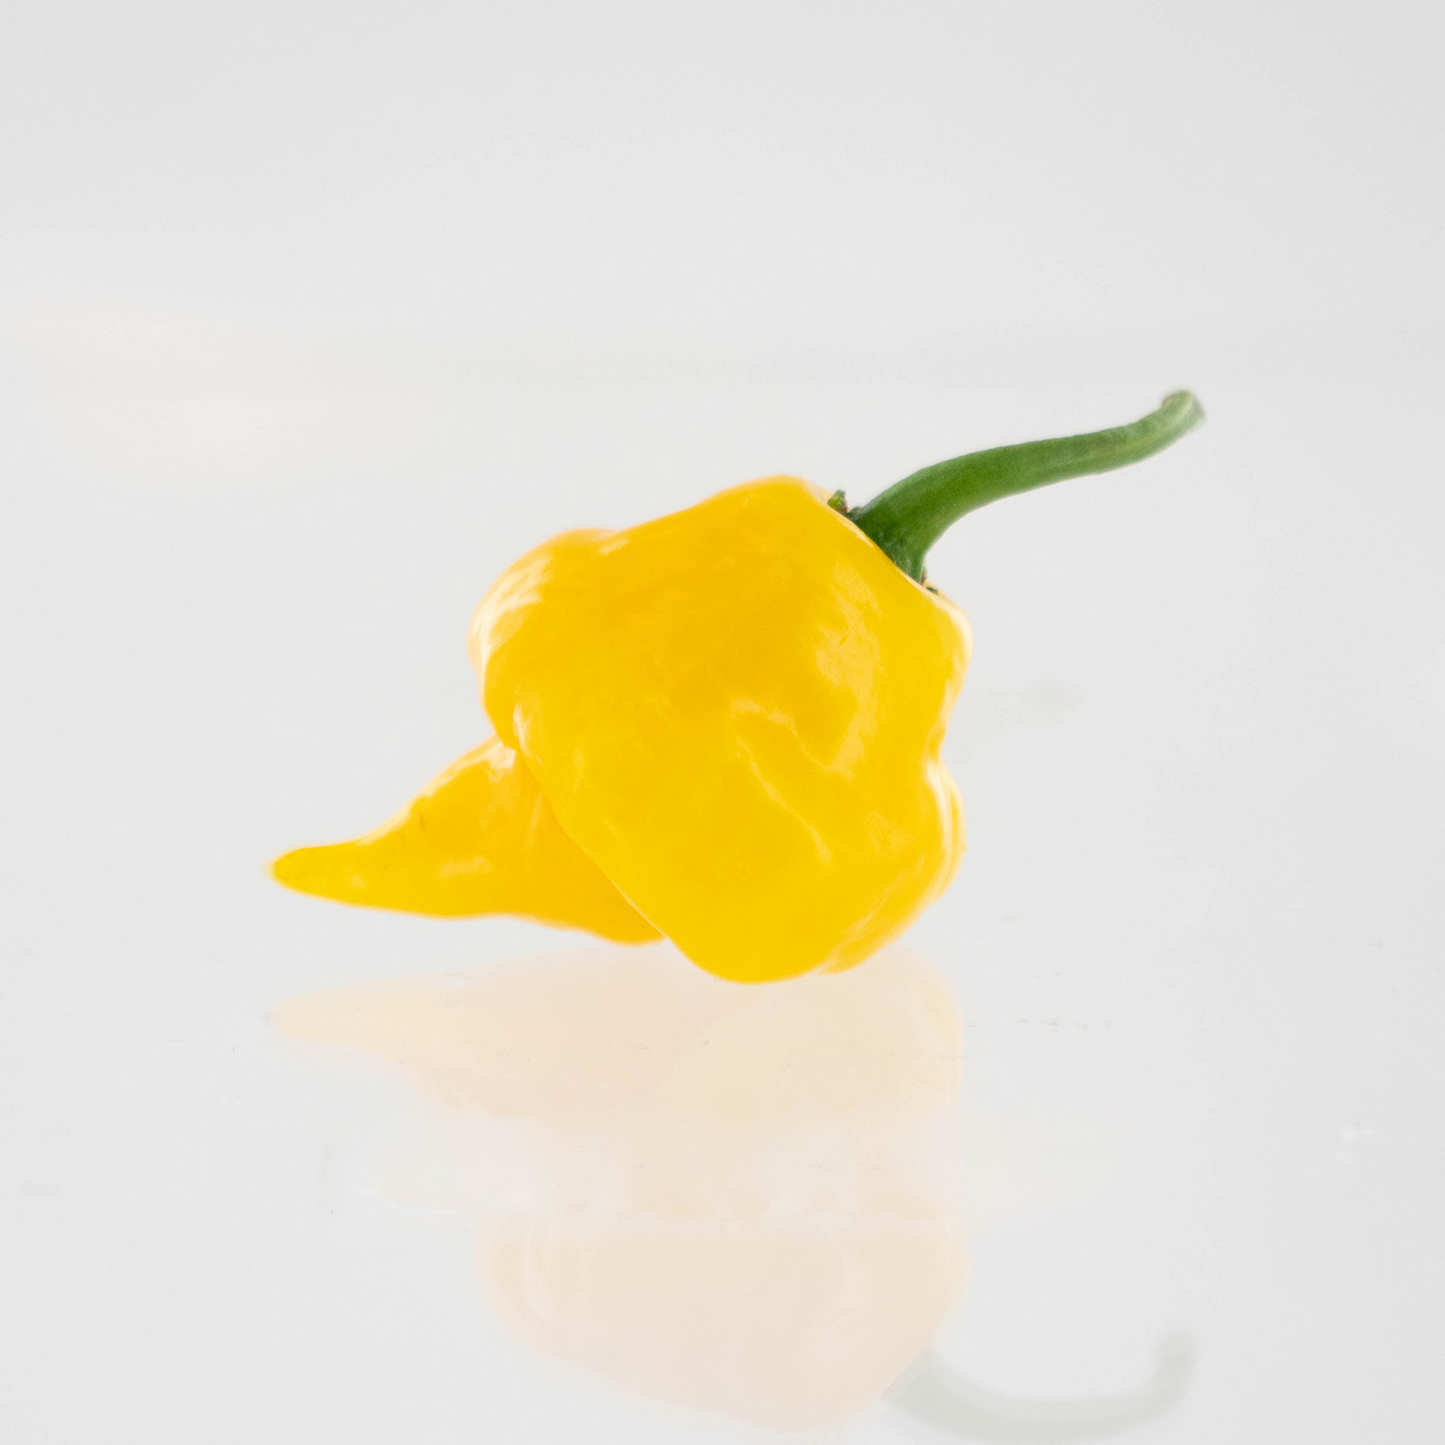 Pepper Joe's Trinidad Perfume Pepper Seeds - yellow Trindad Perfume pepper with stinger